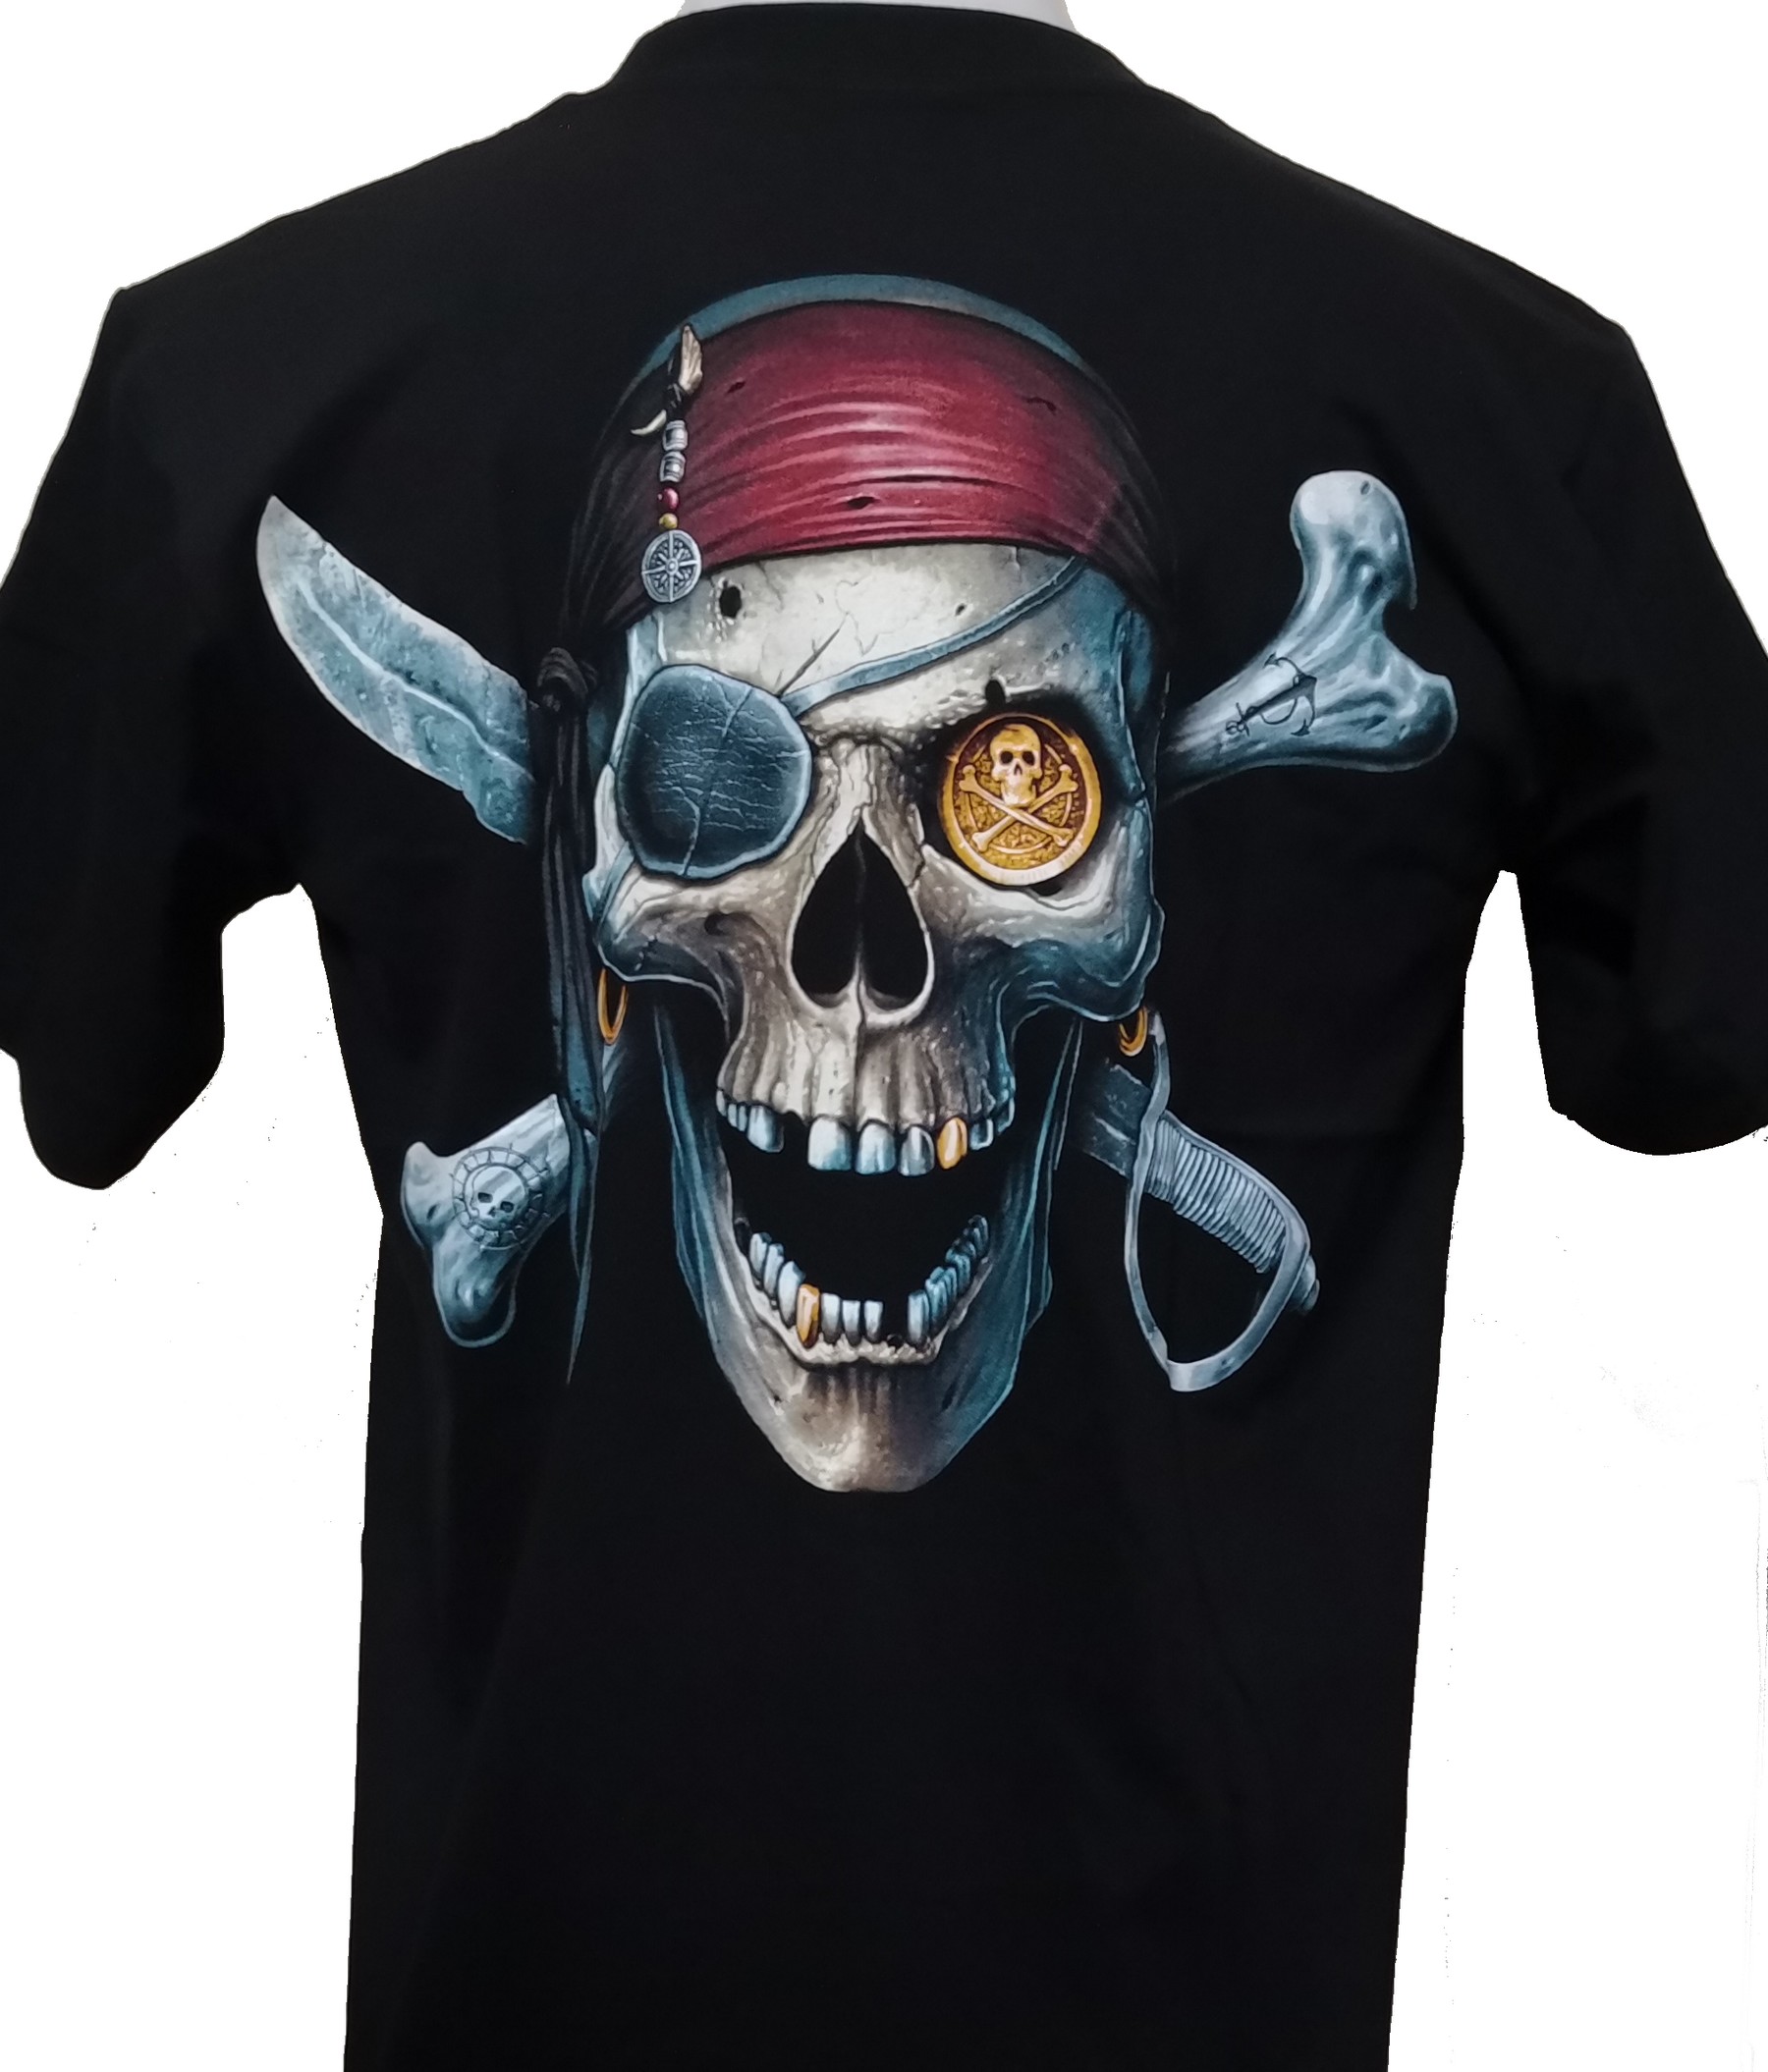 Skull t-shirt size RoxxBKK in Dark) (Glow S the –